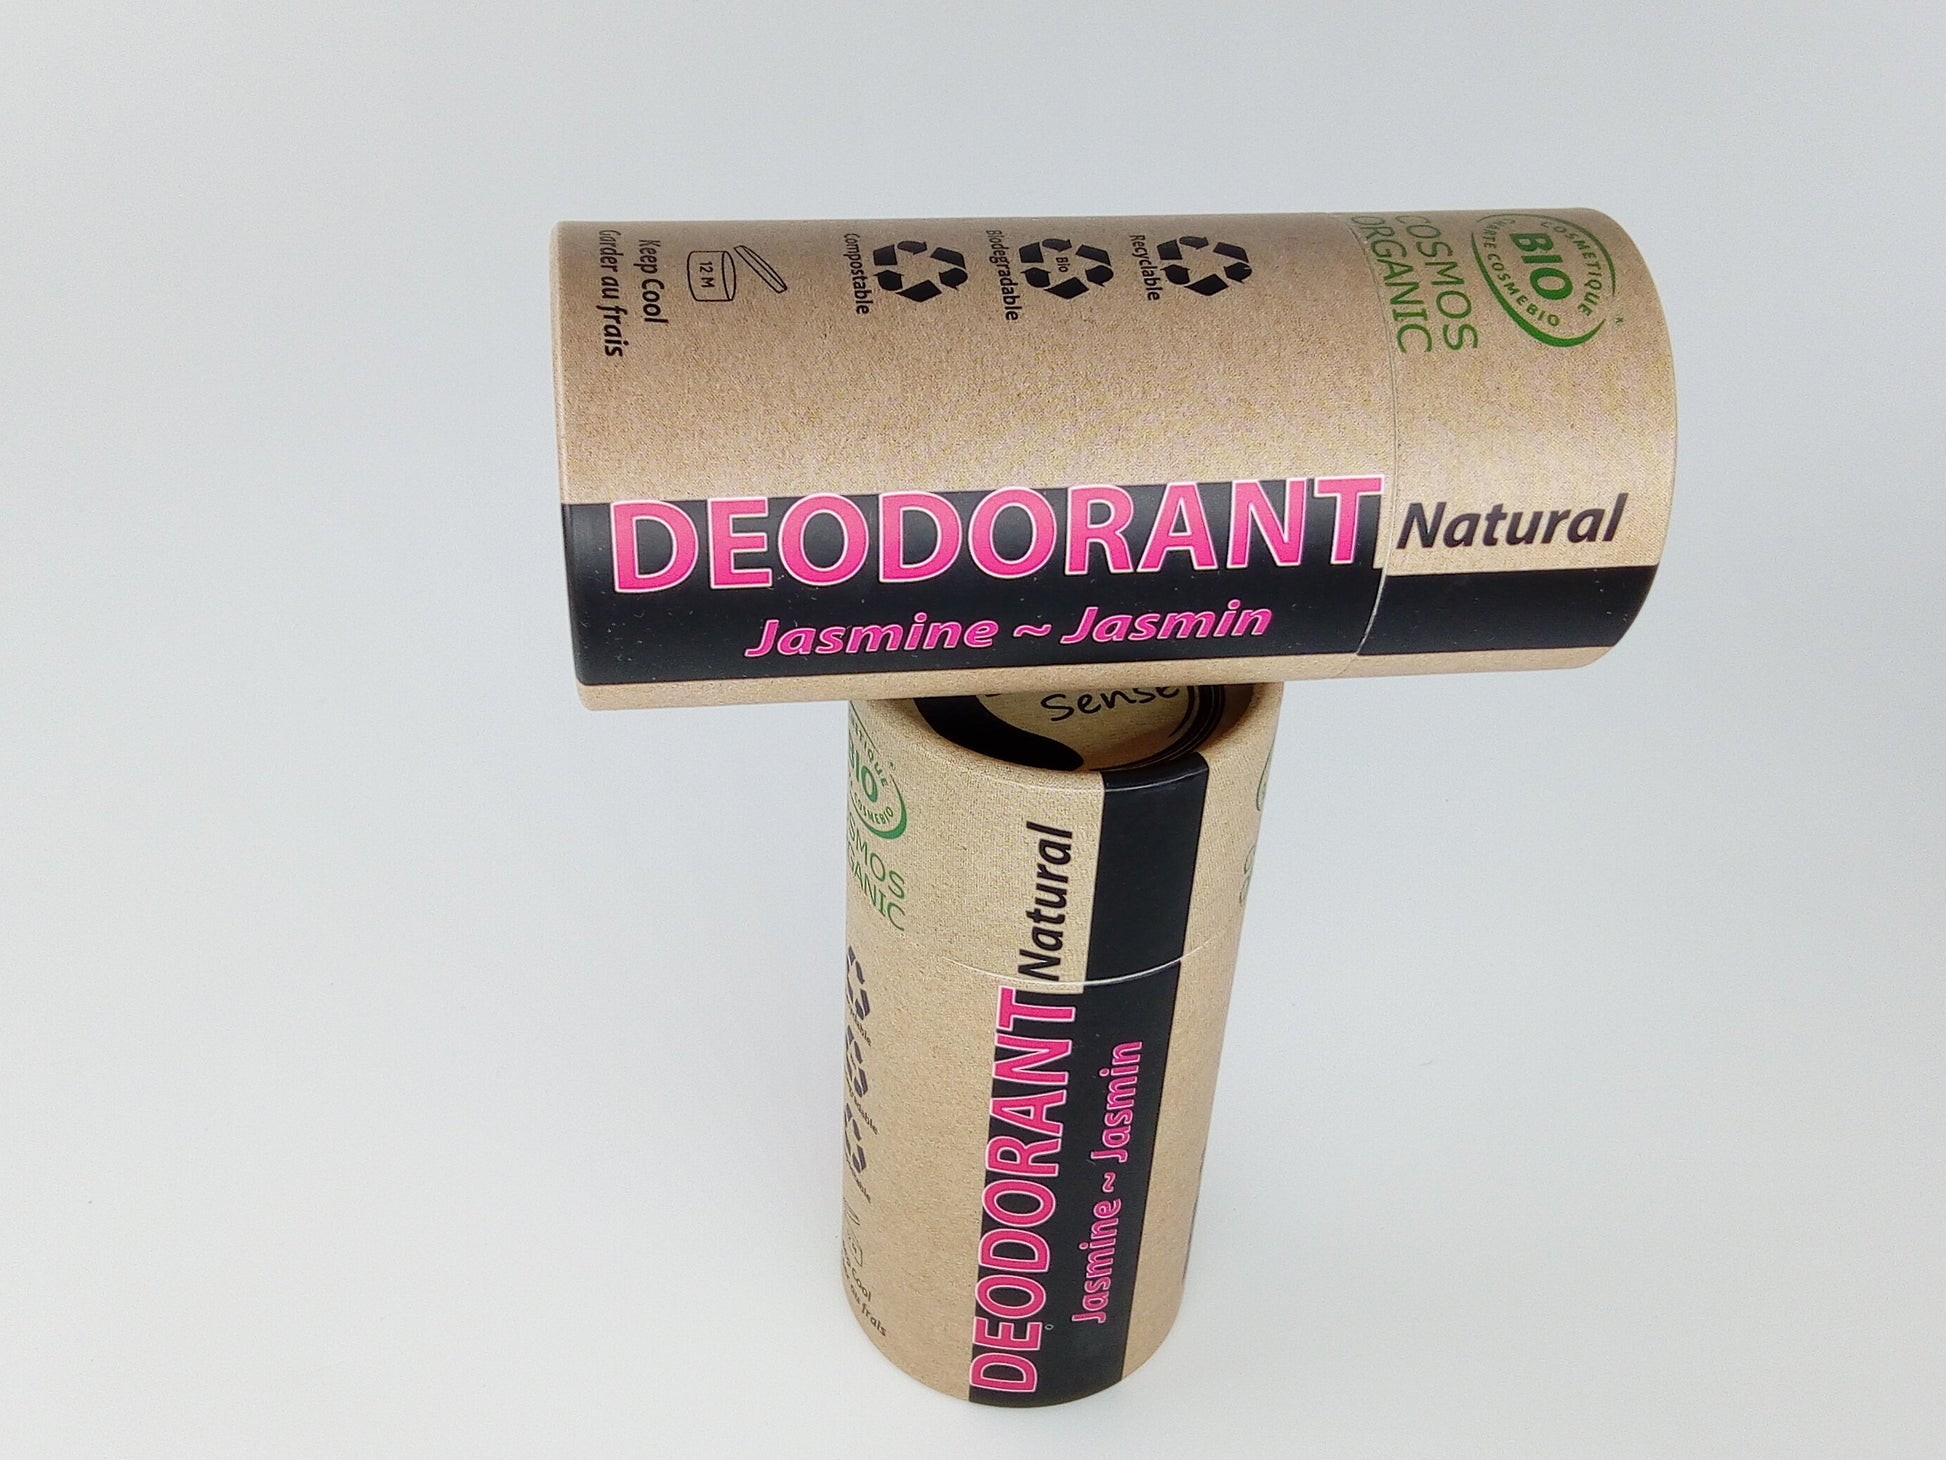 MAXI BUNDLE - 6 x 100ml Organic Certified Natural Deodorant - Jasmine - Earthsenseorganics